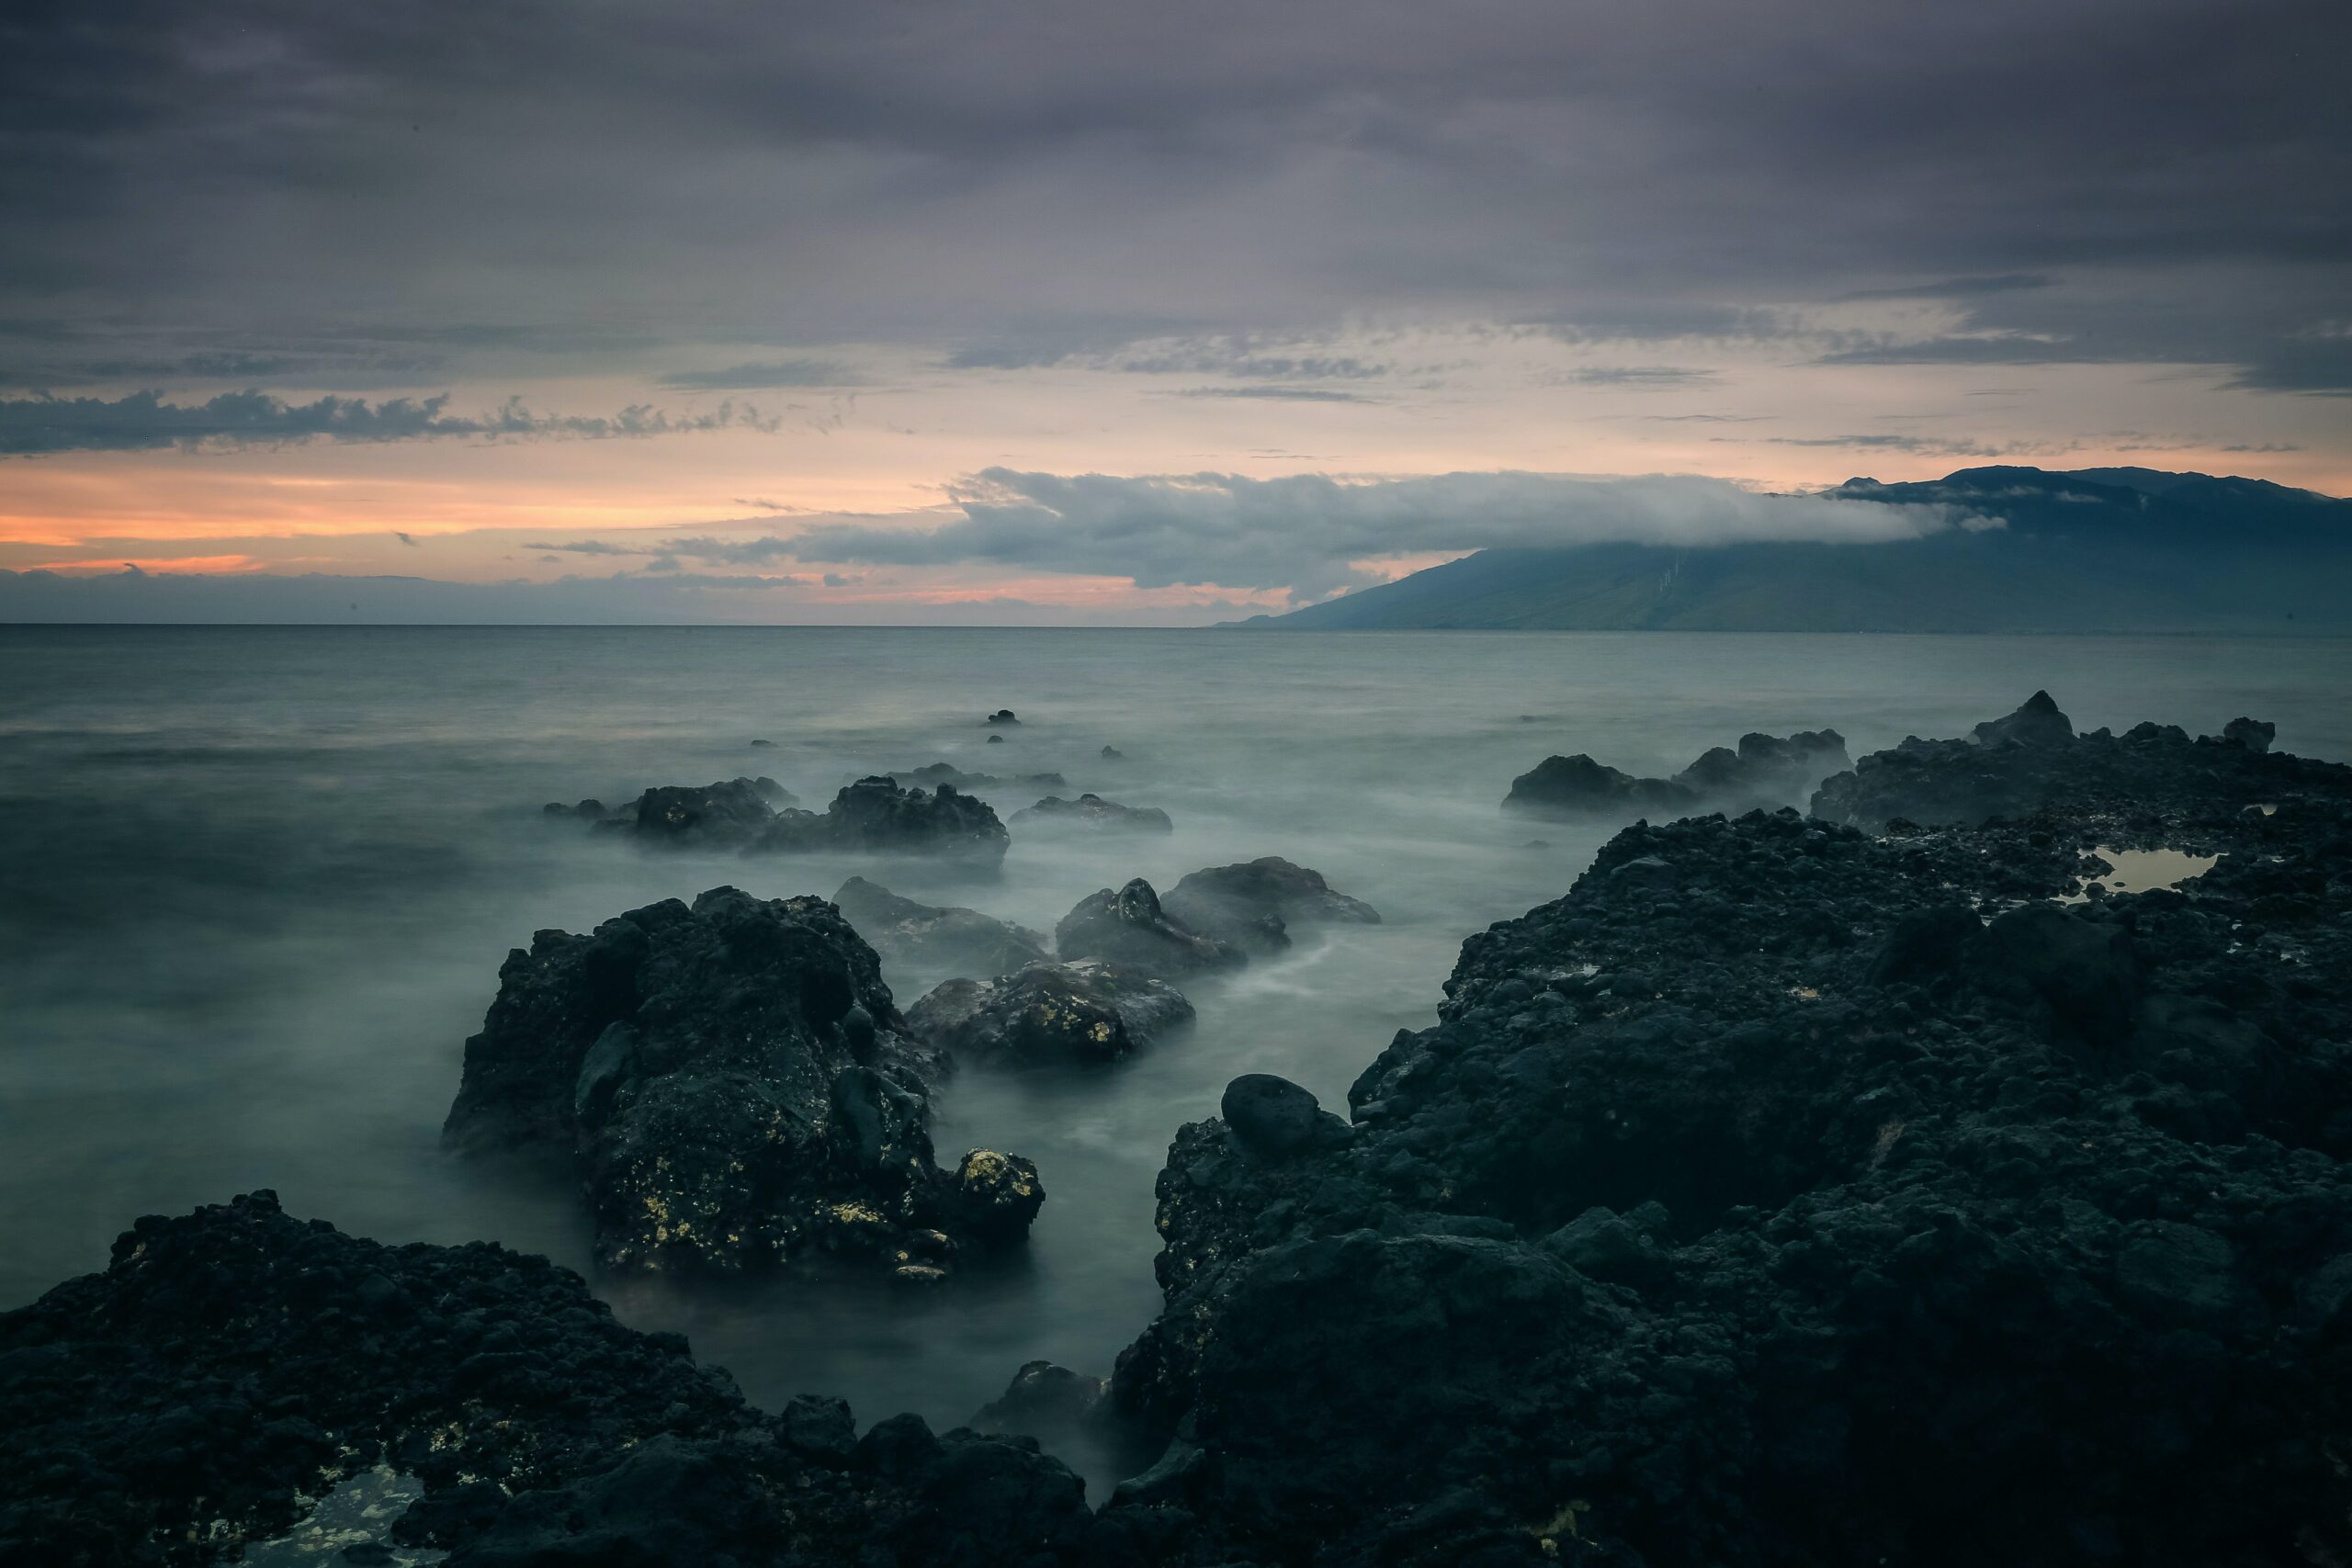 rocks and sea in hawaii at dusk